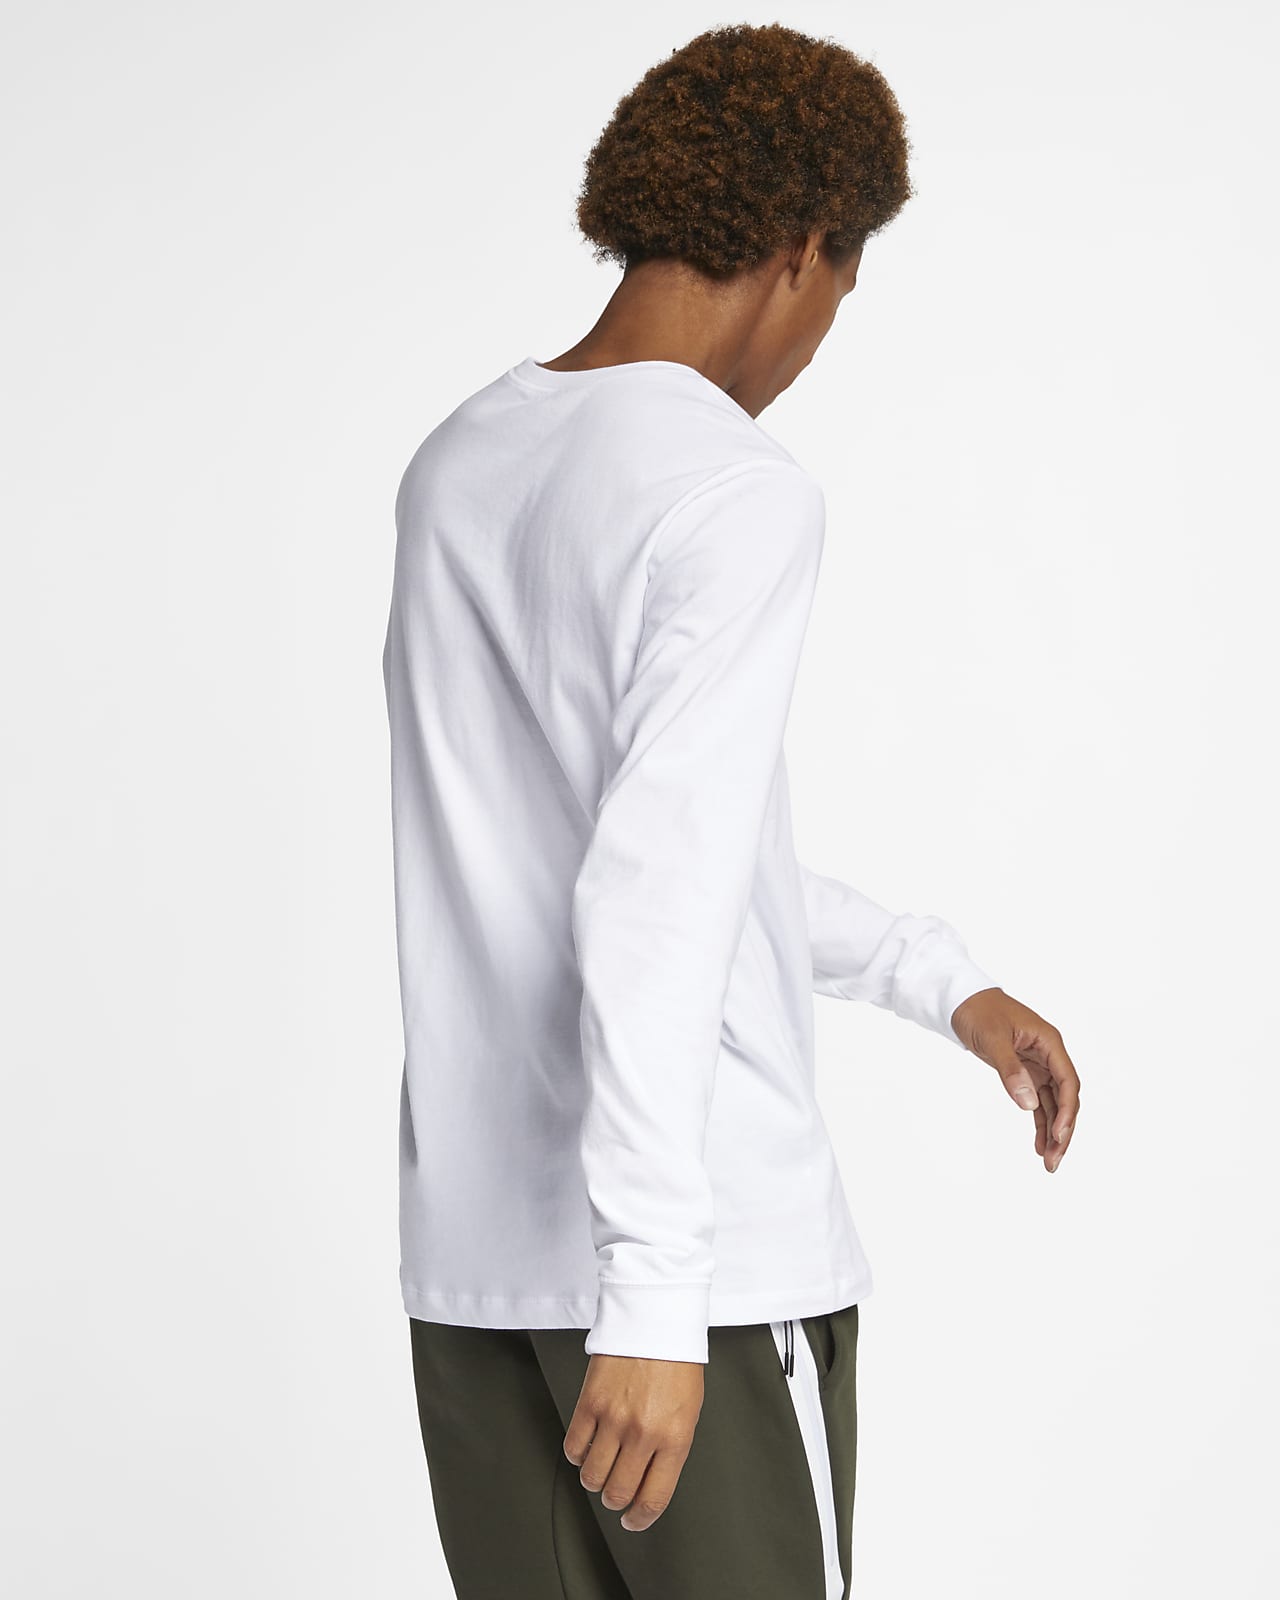 Nike Men's NBA Long Sleeve Tee / T-Shirt / Tshirt - Black/Multi